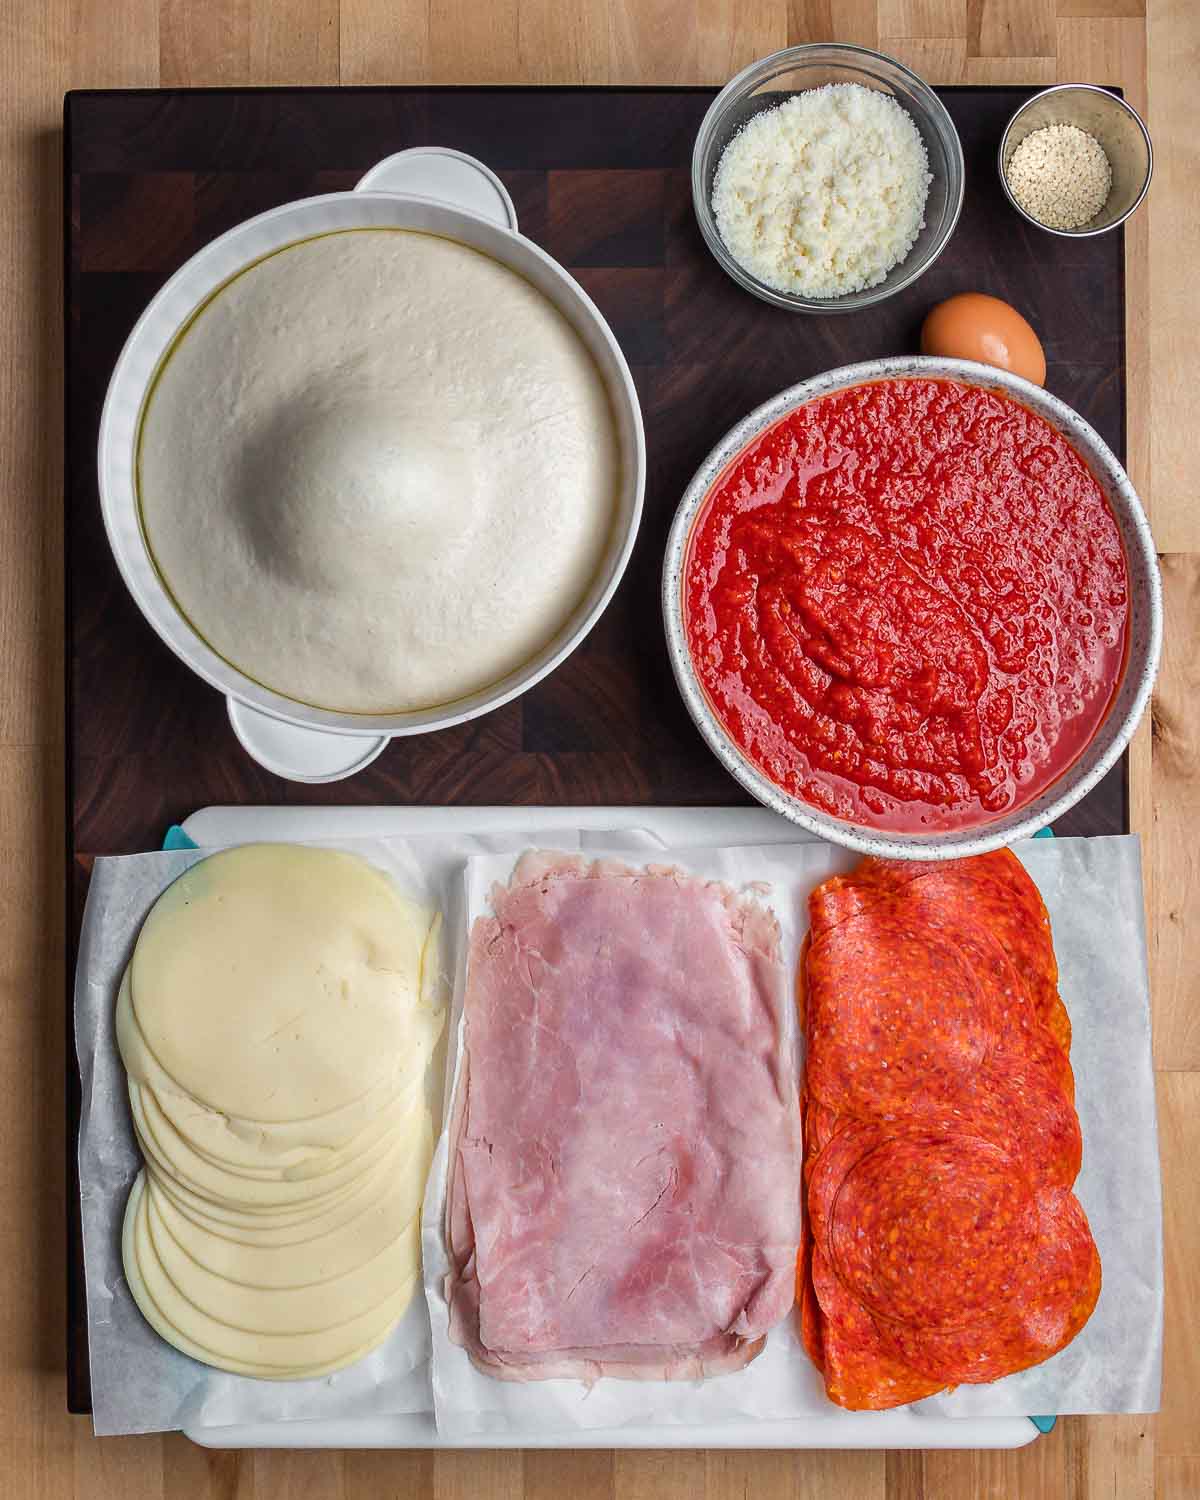 Ingredients shown: pizza dough, Pecorino, sesame seeds, 1 egg, marinara sauce, provolone, ham, and pepperoni.